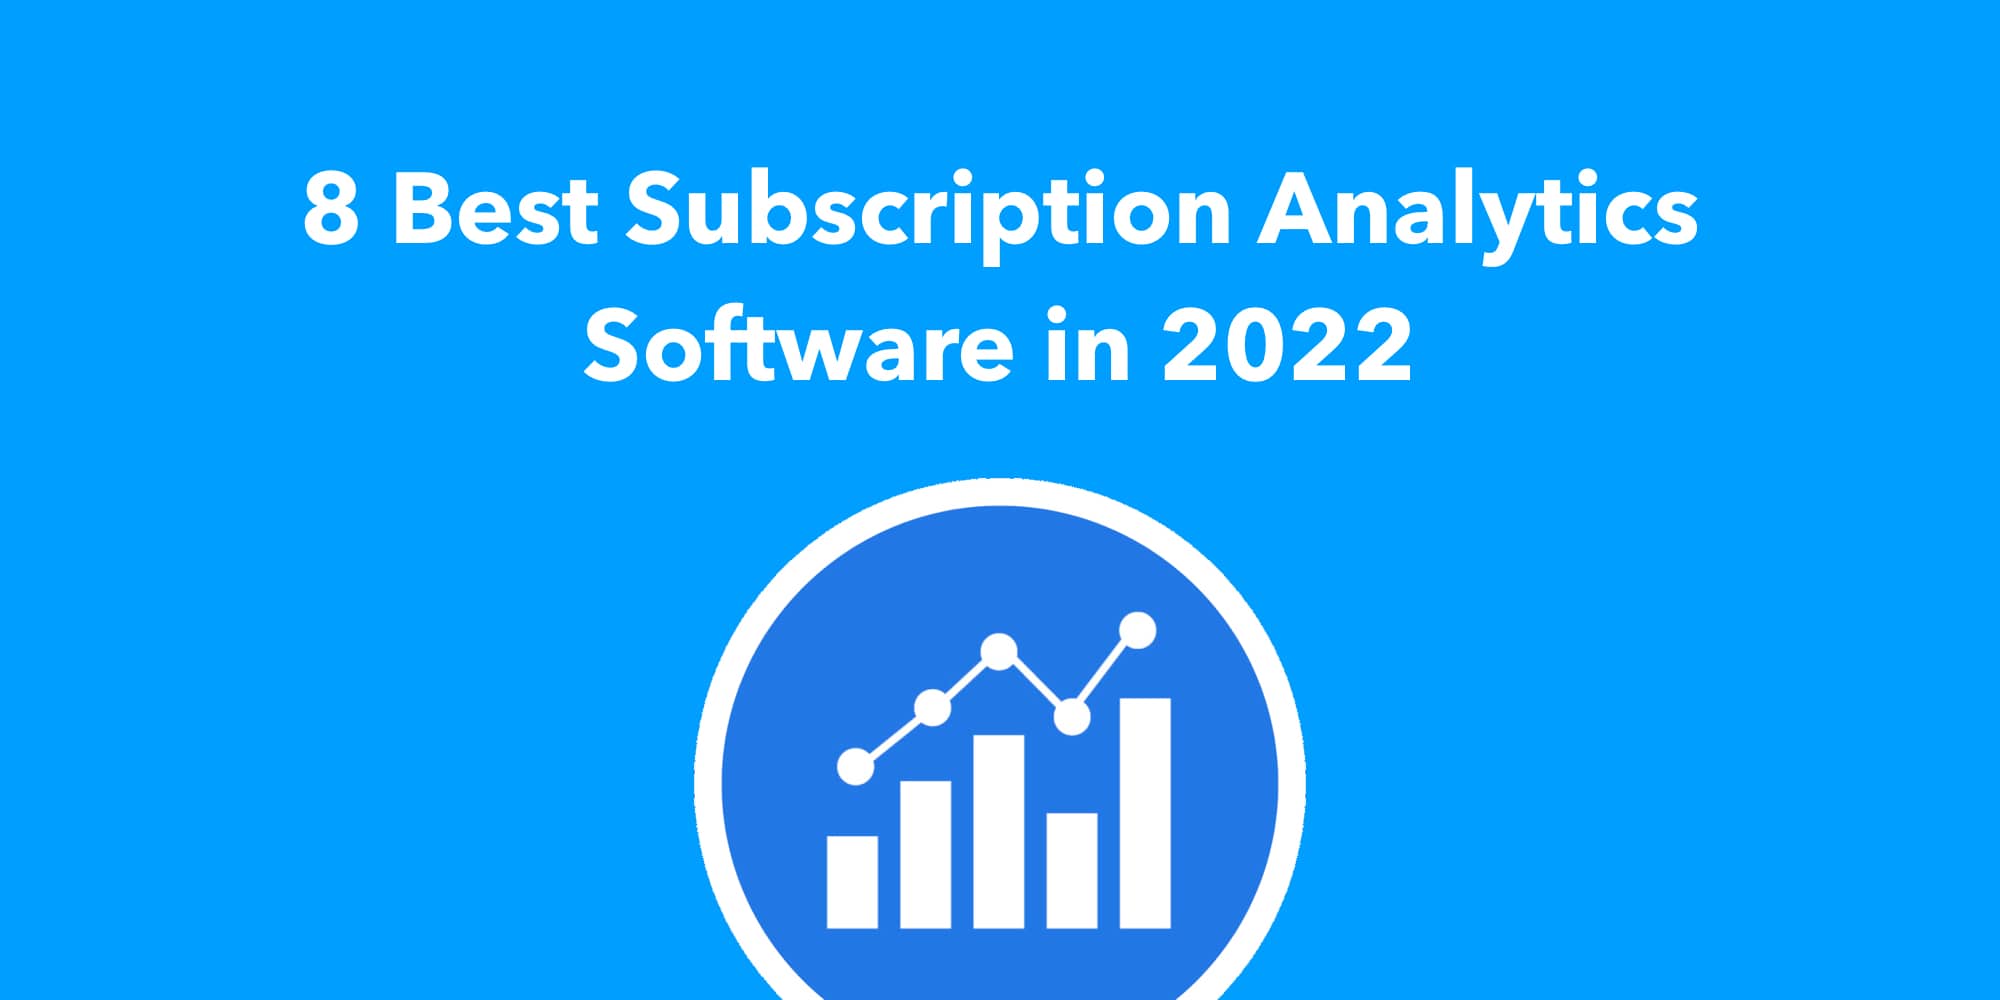 8 Best Subscription Analytics Software in 2022